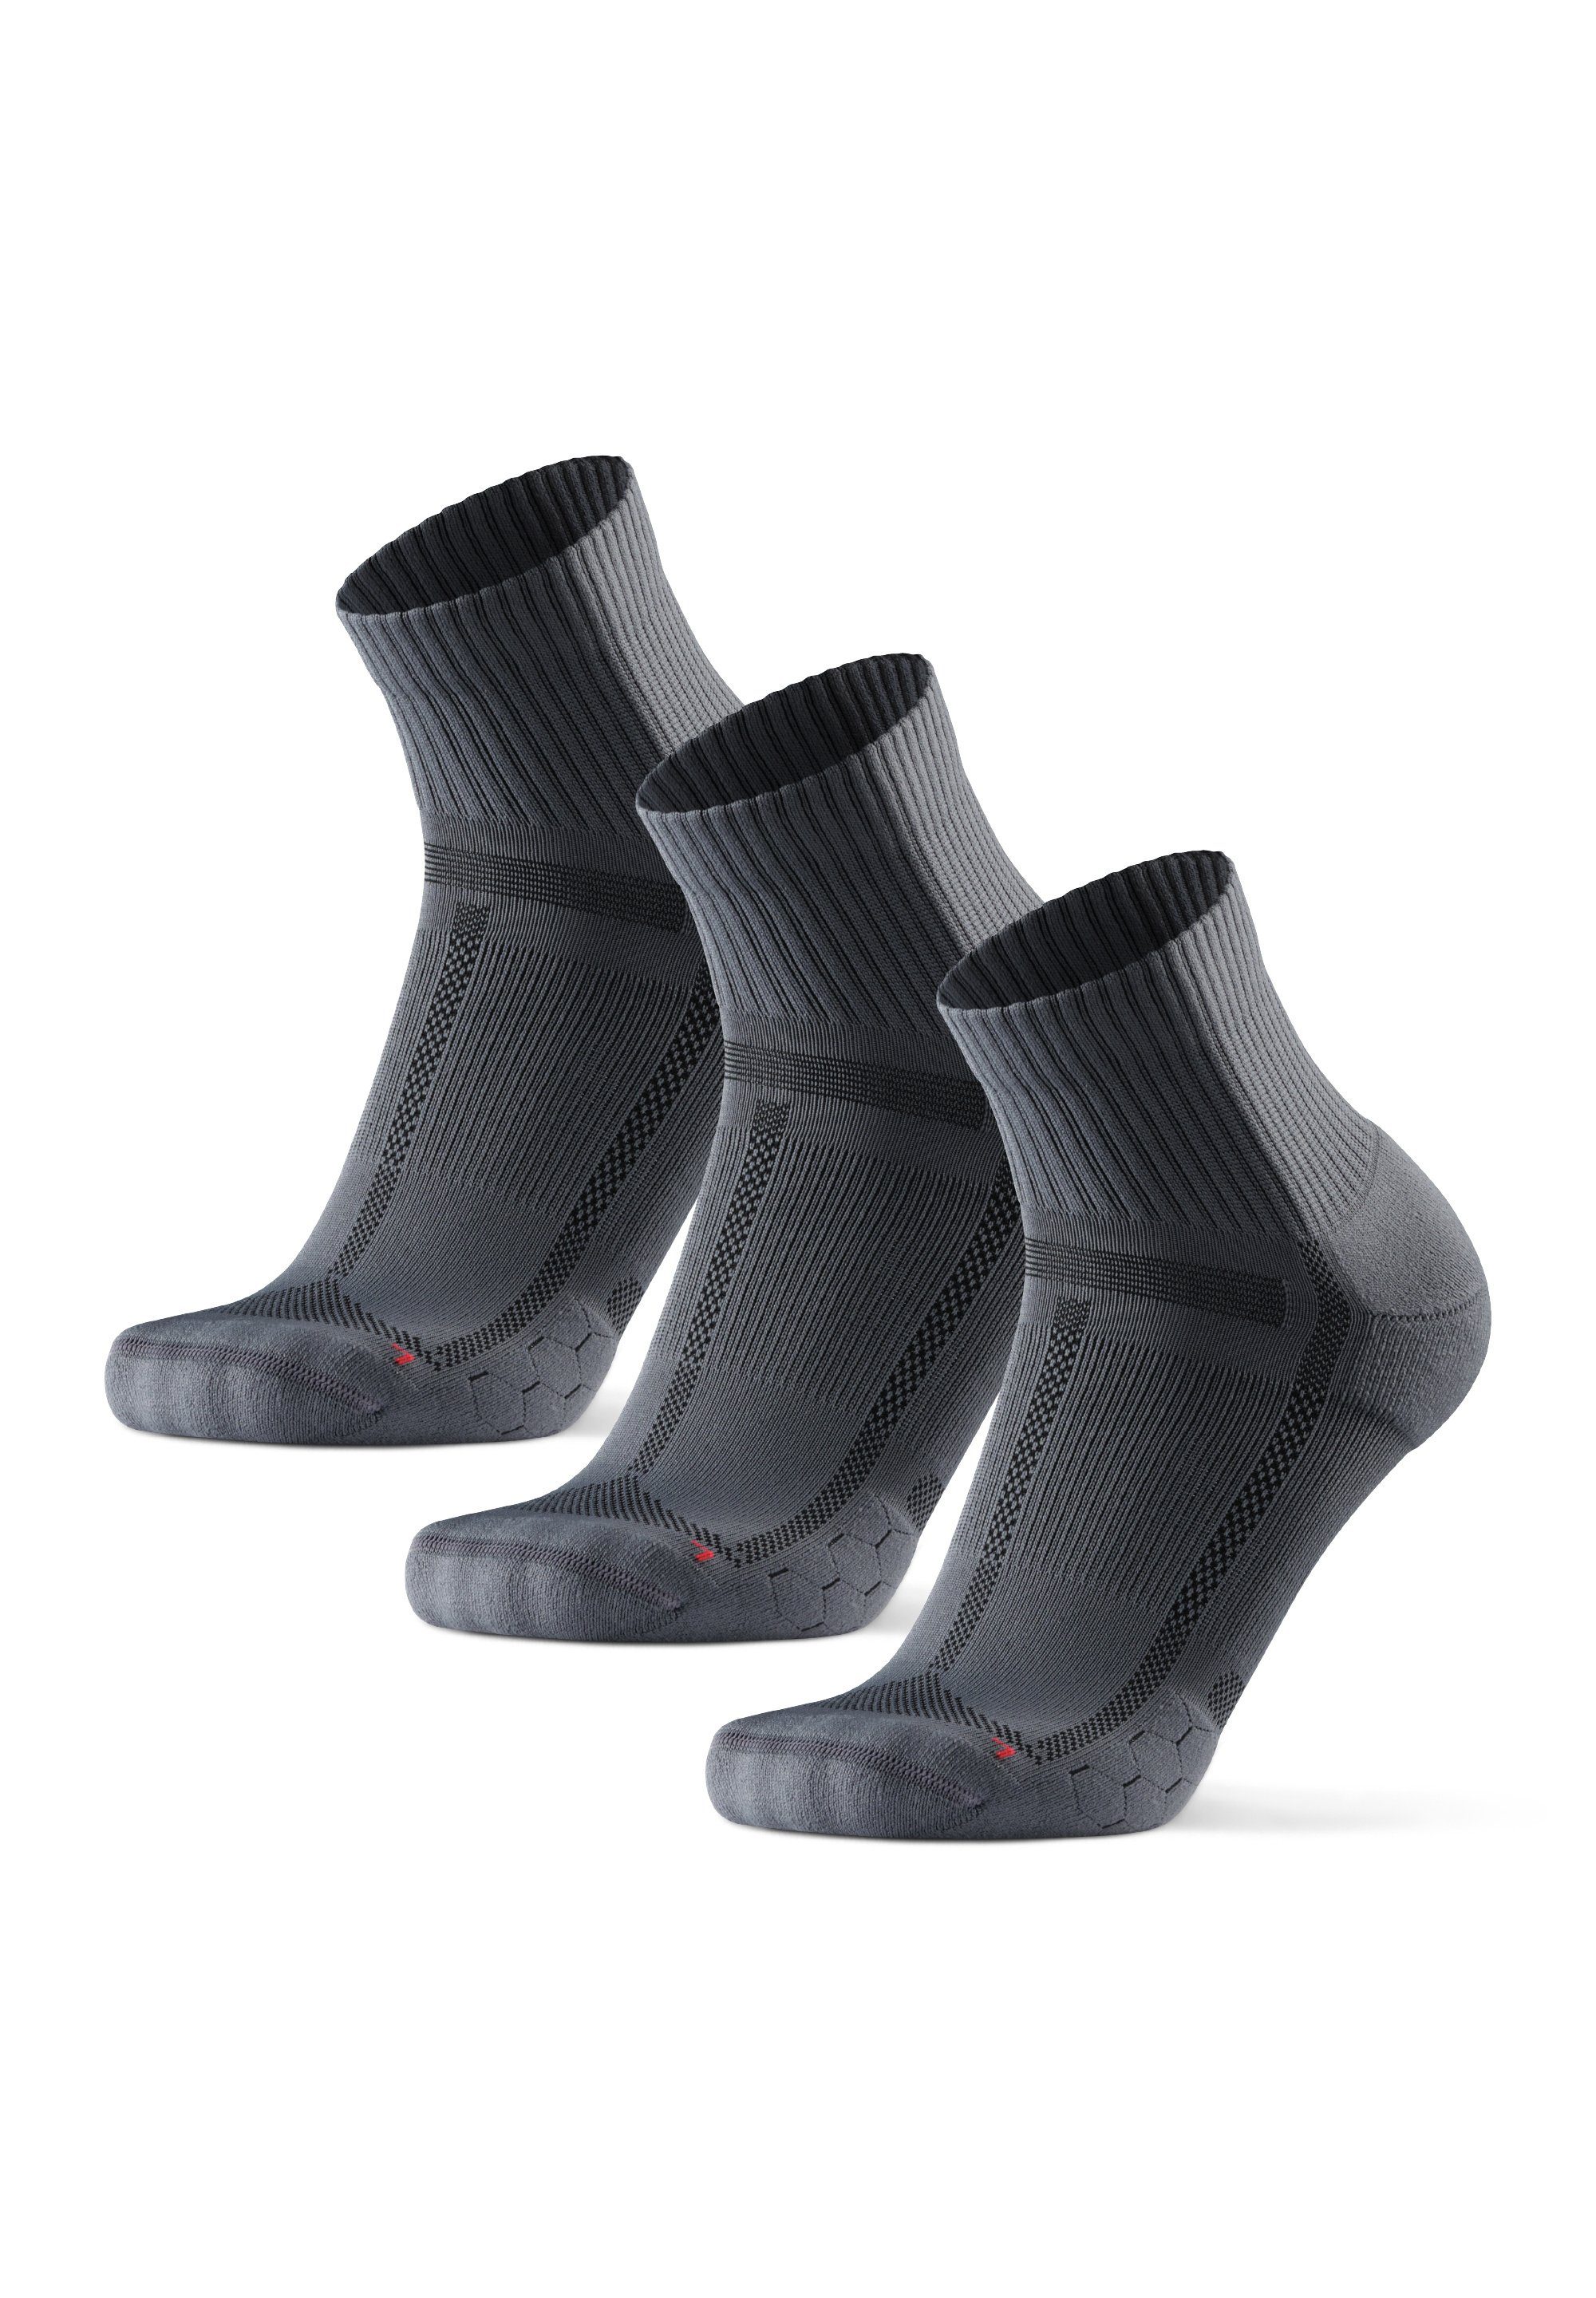 grey/black Long Anti-Blasen, Socks 3-Paar) Technisch Distance DANISH ENDURANCE Running (Packung, Laufsocken